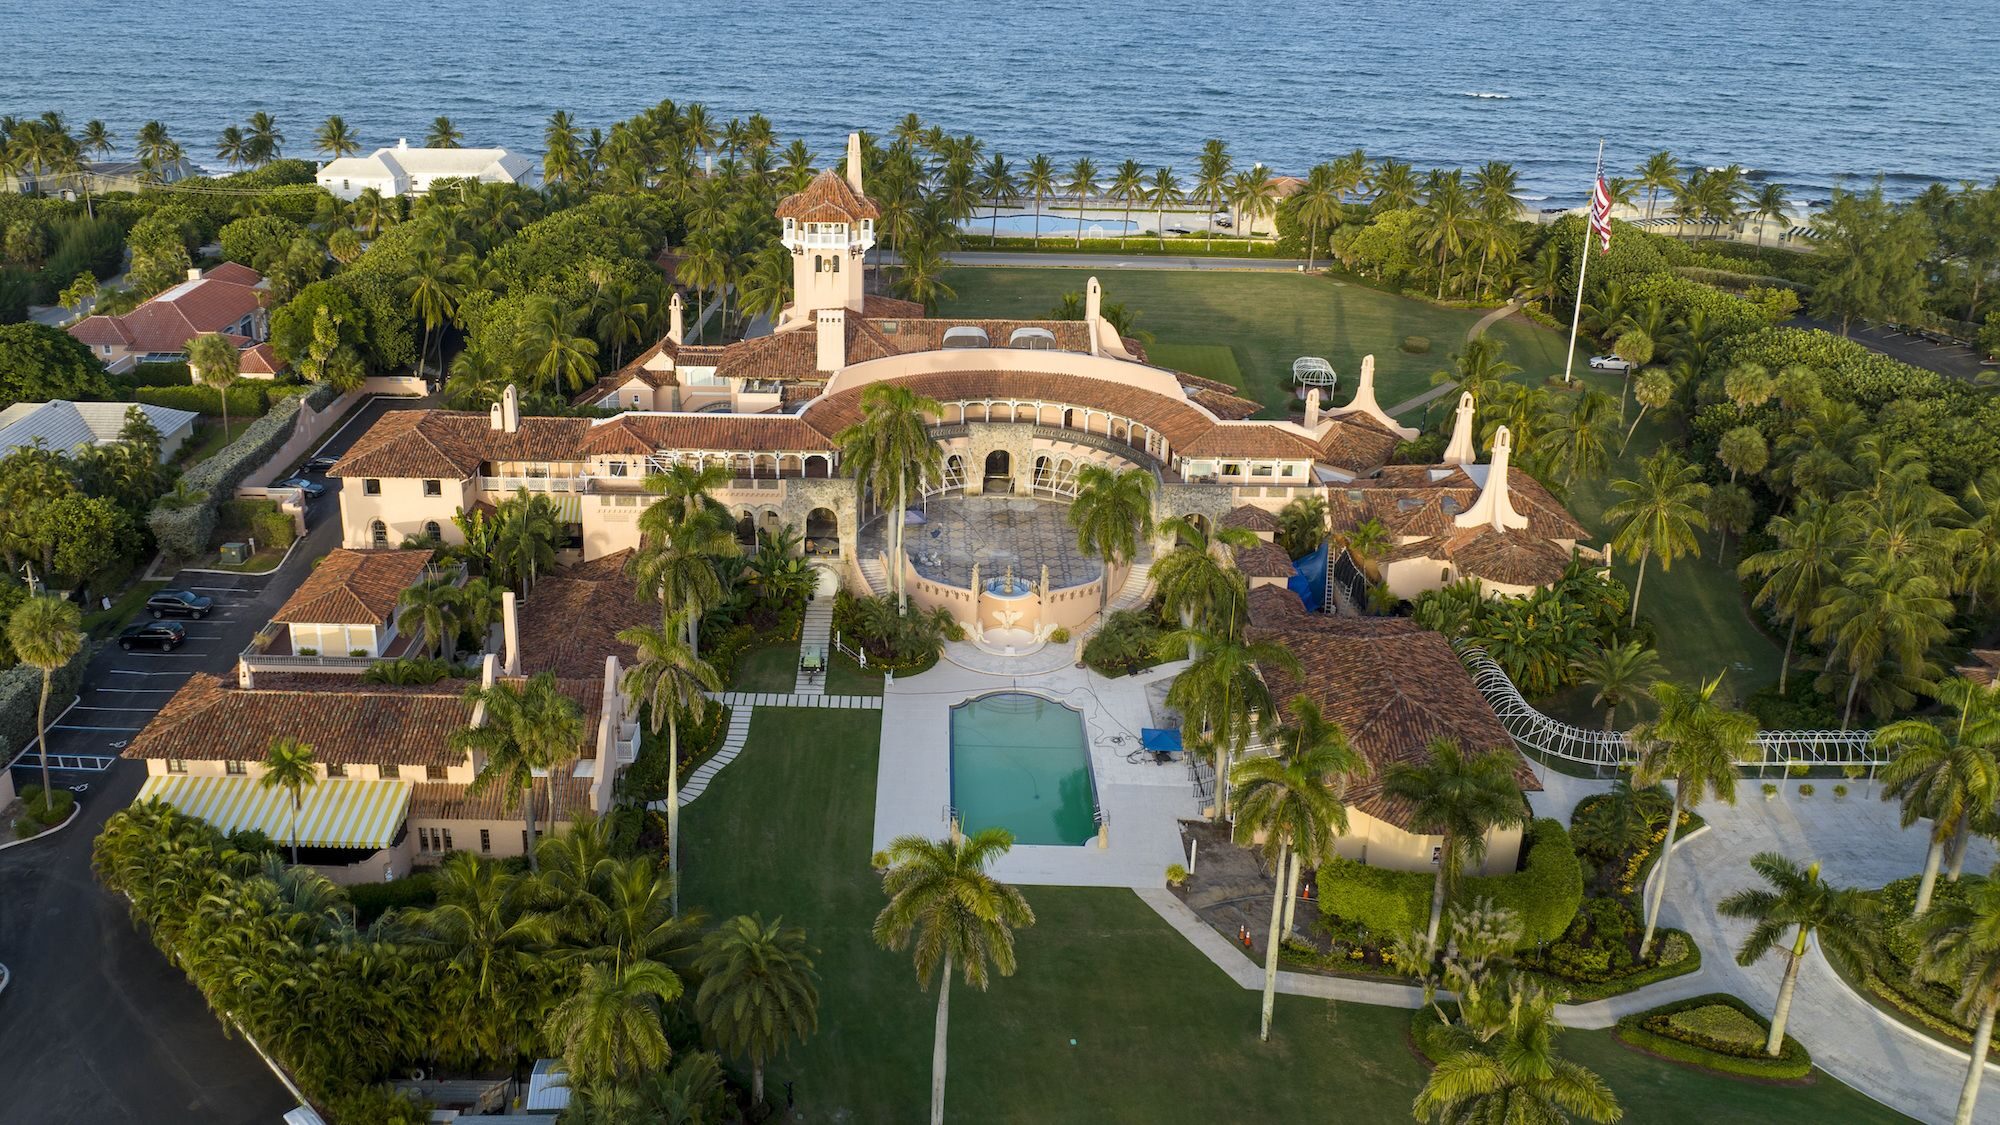 An aerial view of former President Donald Trump's Mar-a-Lago estate in Palm Beach, Florida. Mandato...